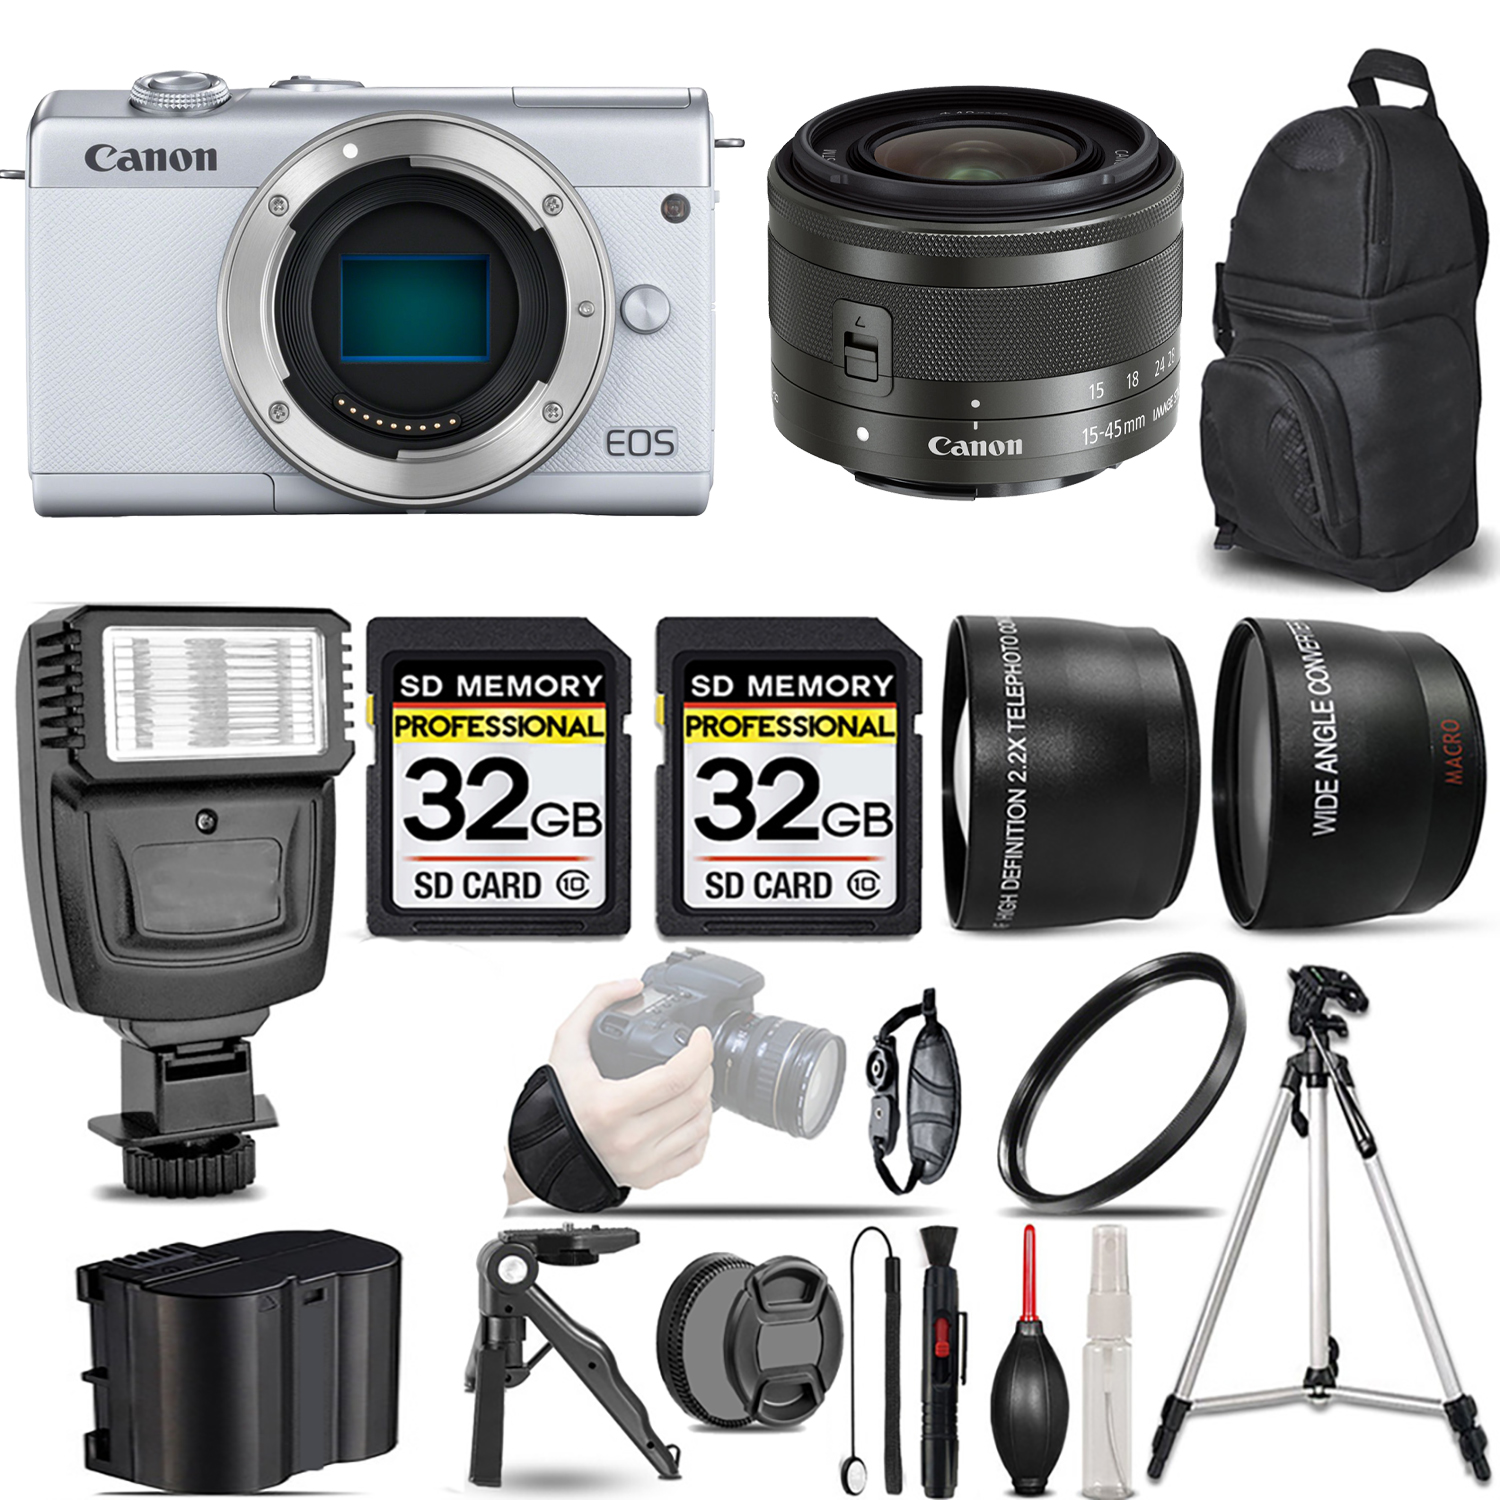 EOS M200  Camera (White) + 15-45mm IS STM Lens (Graphite) + Flash + 64GB - Kit *FREE SHIPPING*